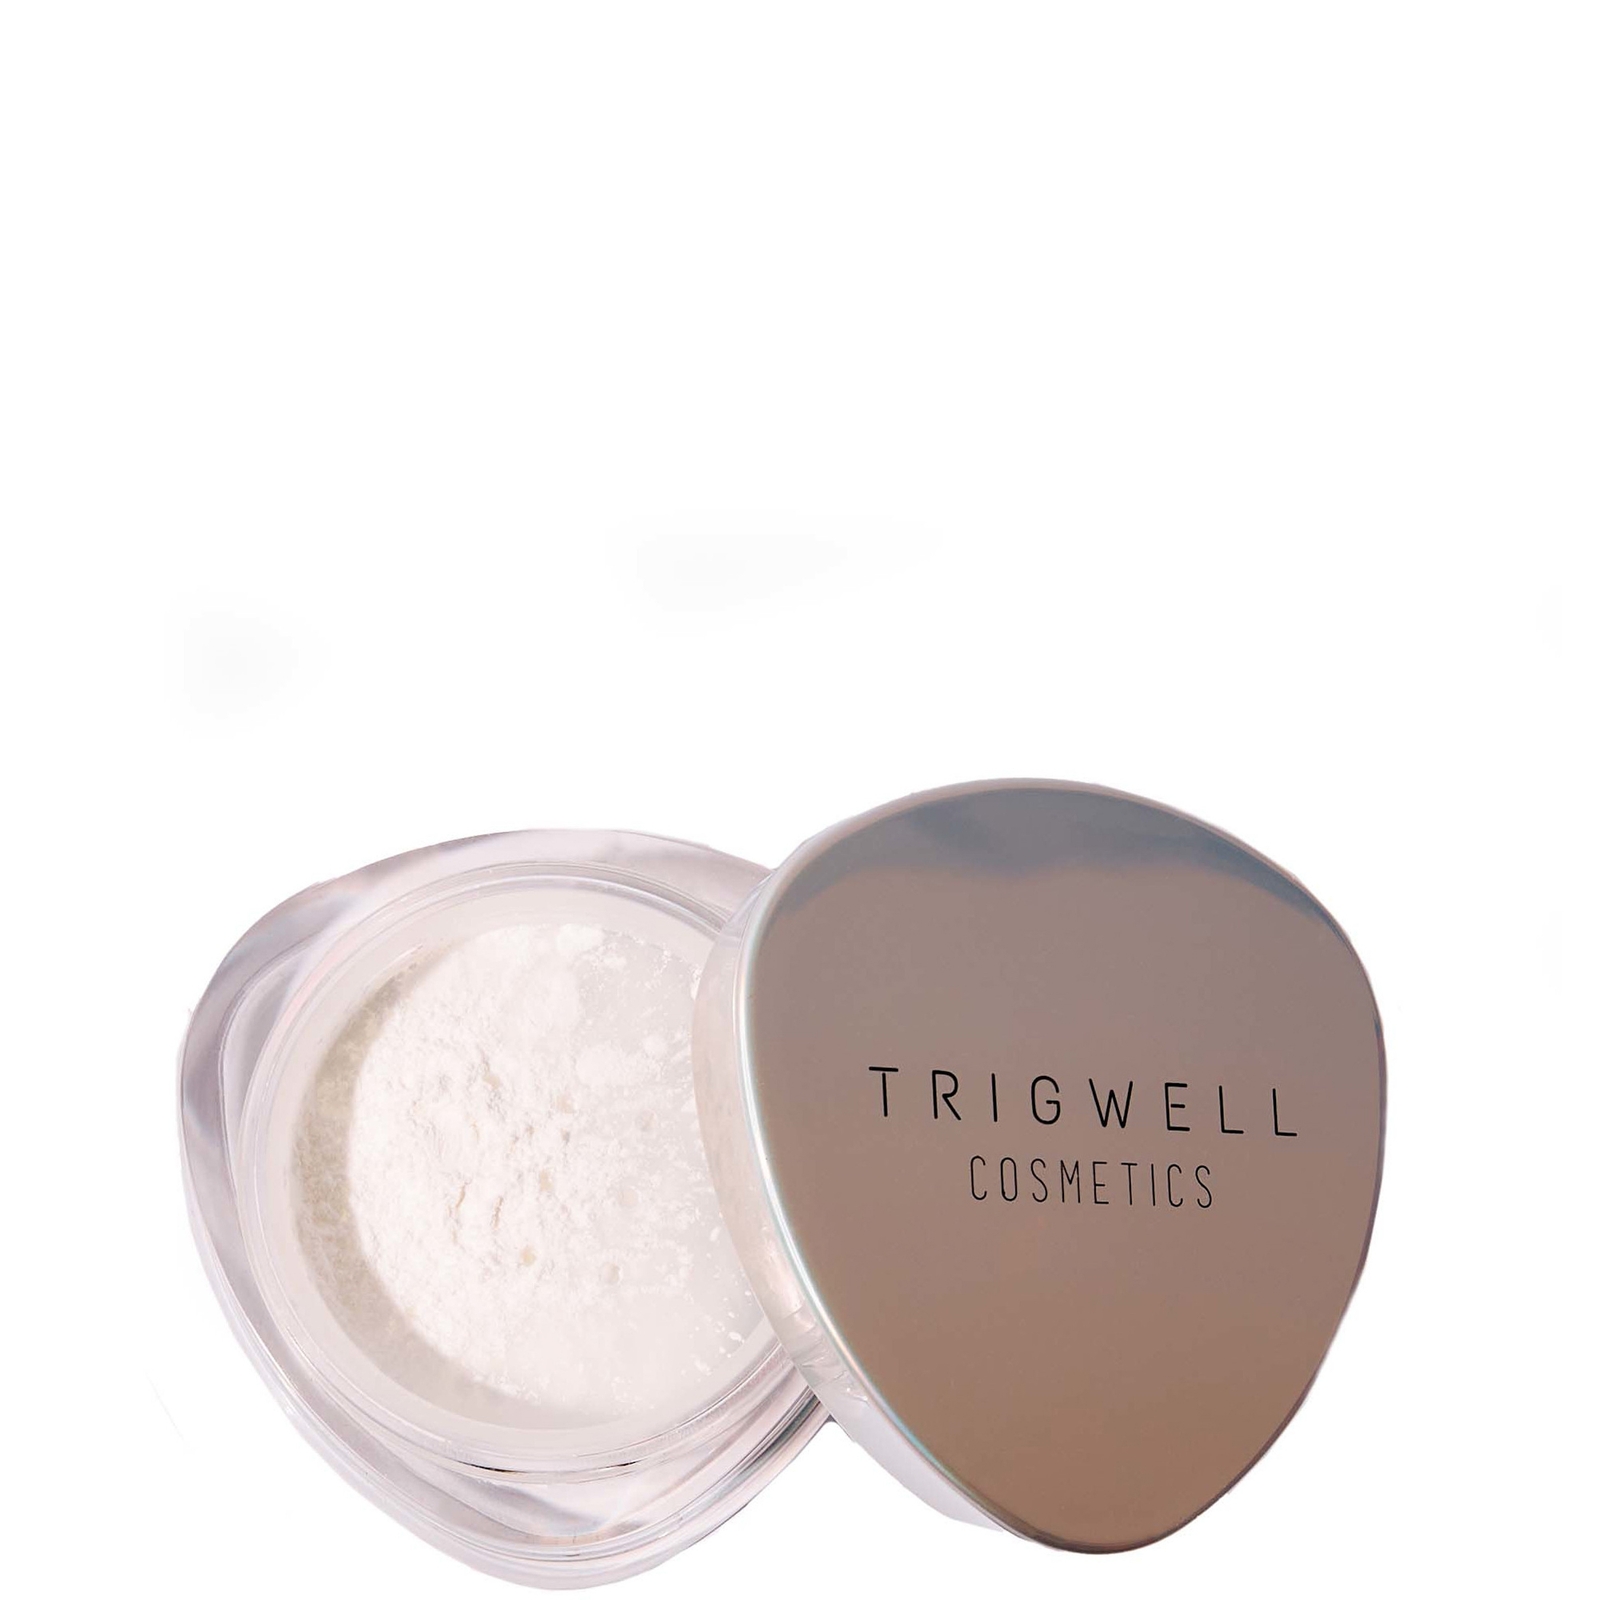 Trigwell Cosmetics Velvet Setting Powder 8g (various Shades) - Shade 0 In White